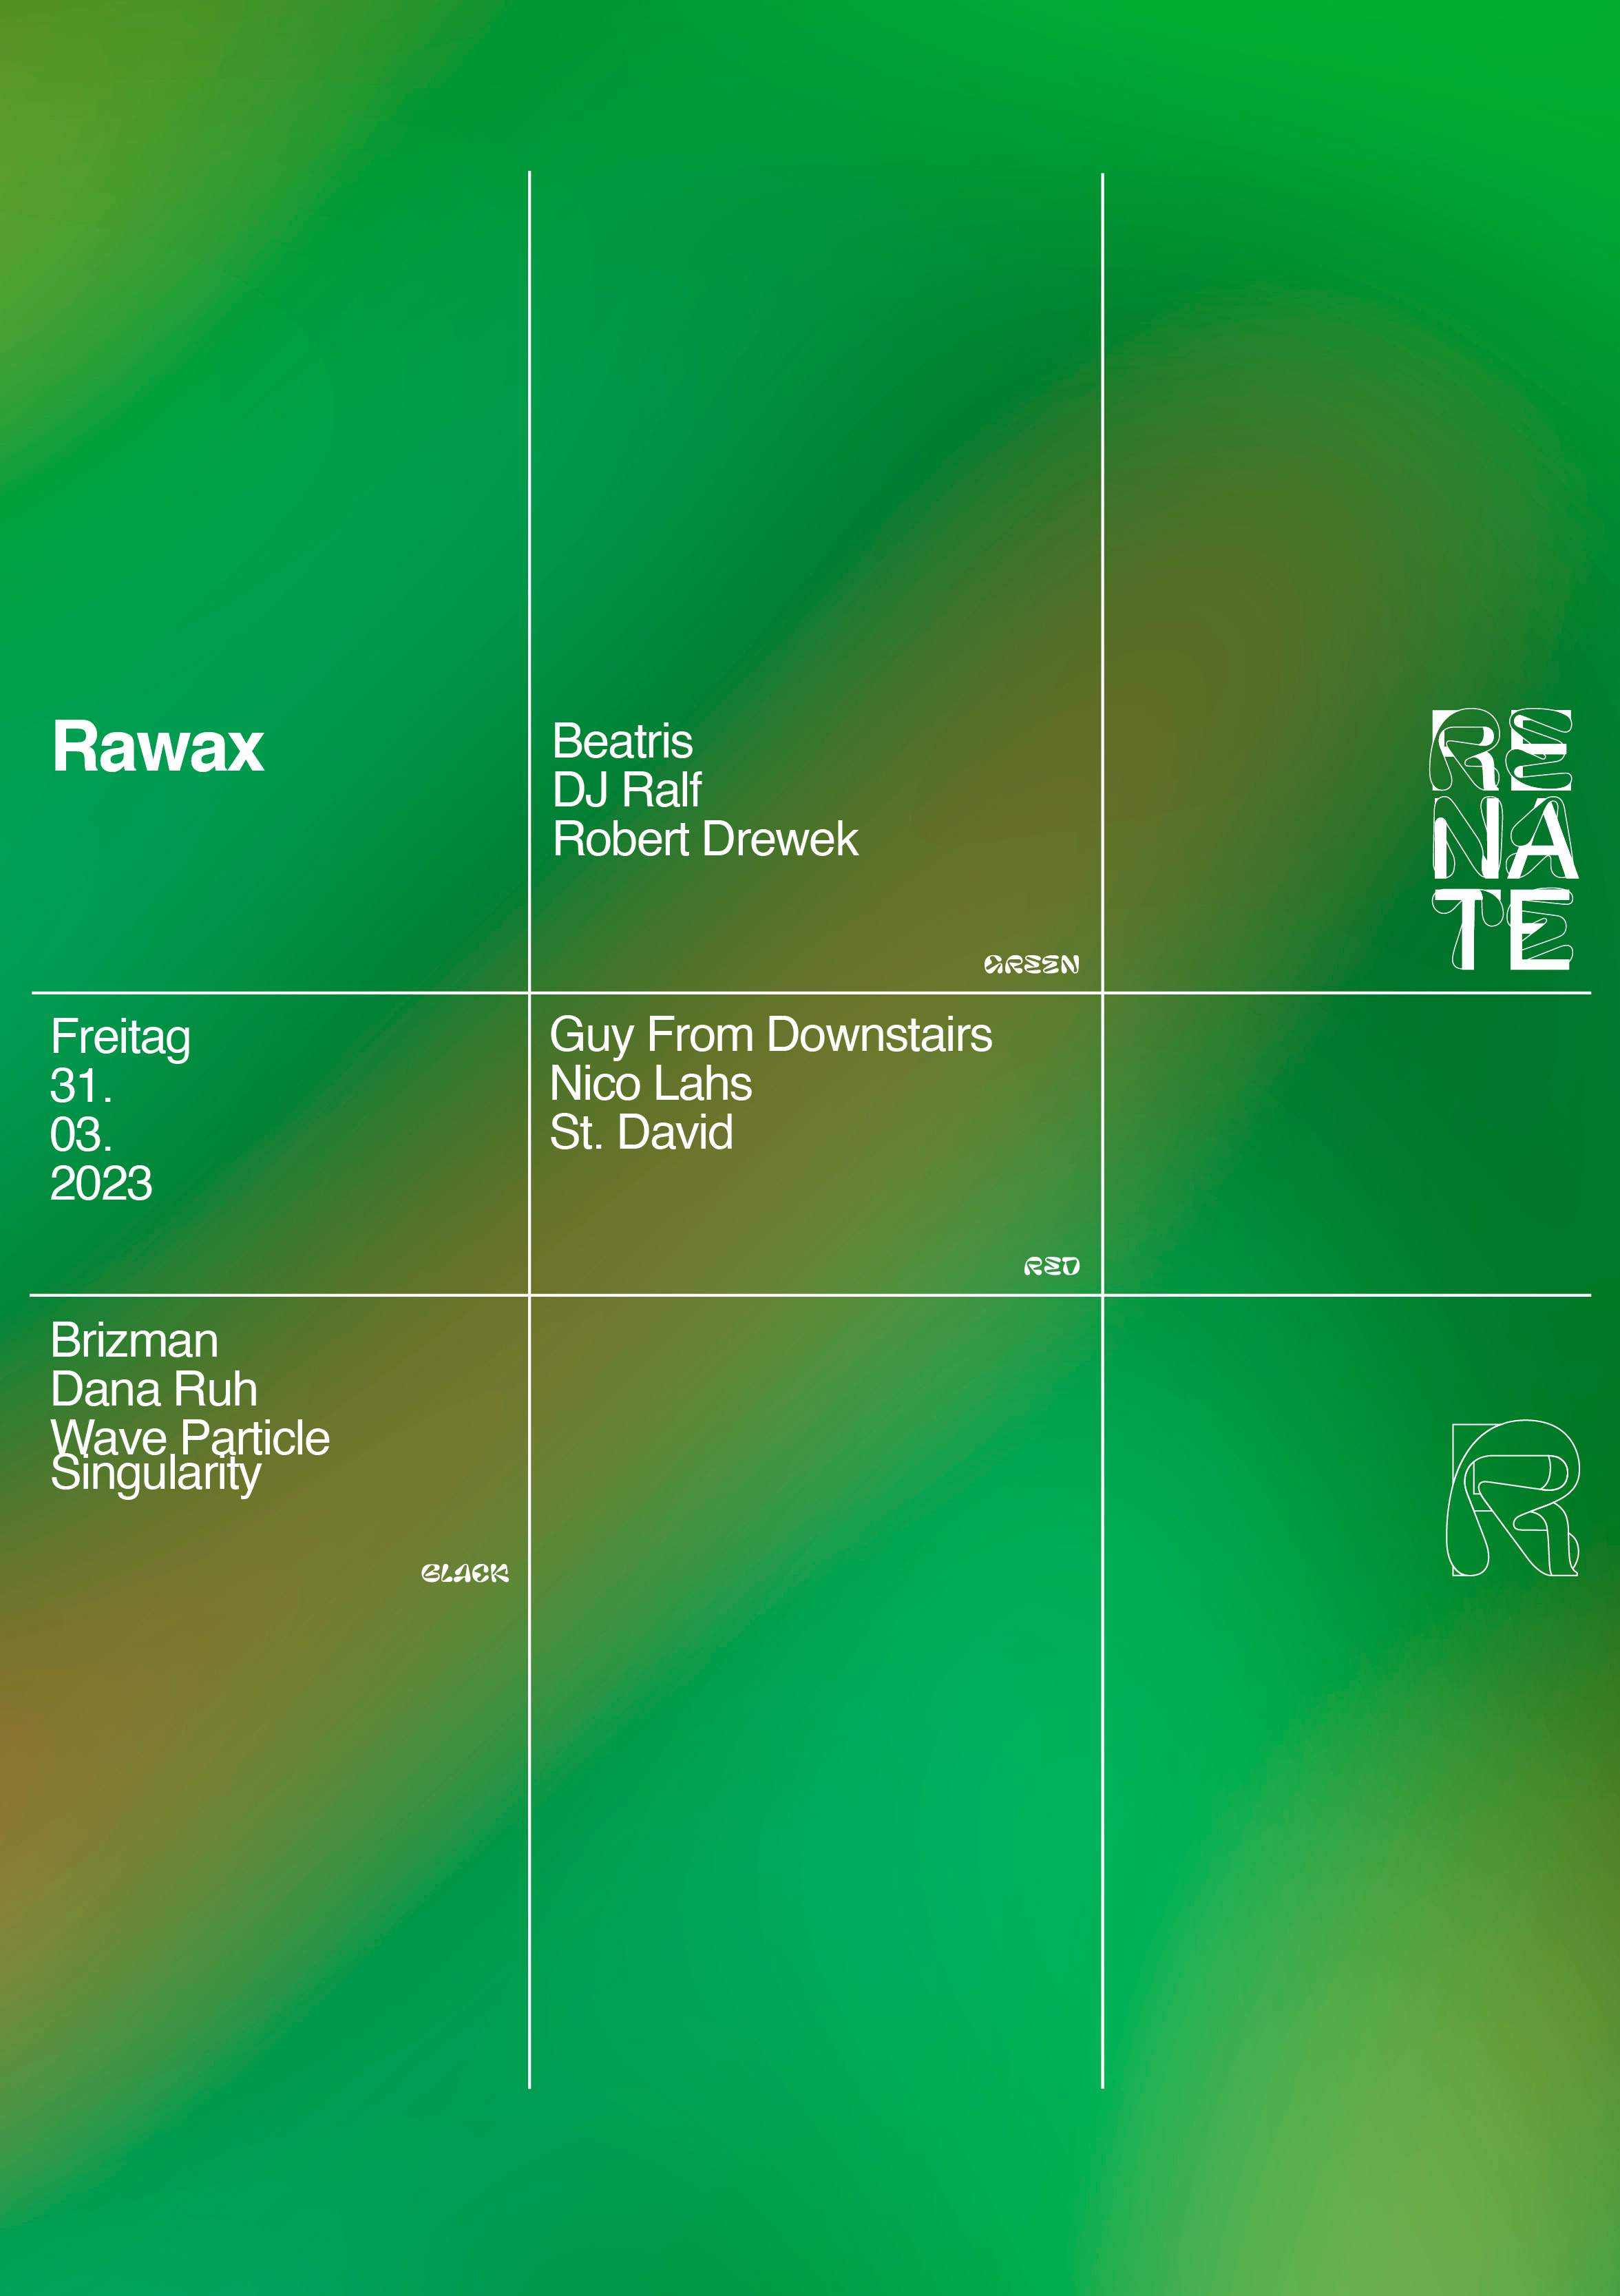 Rawax x Renate with DJ Ralf, Dana Ruh, Nico Lahs, Beatris - Página frontal